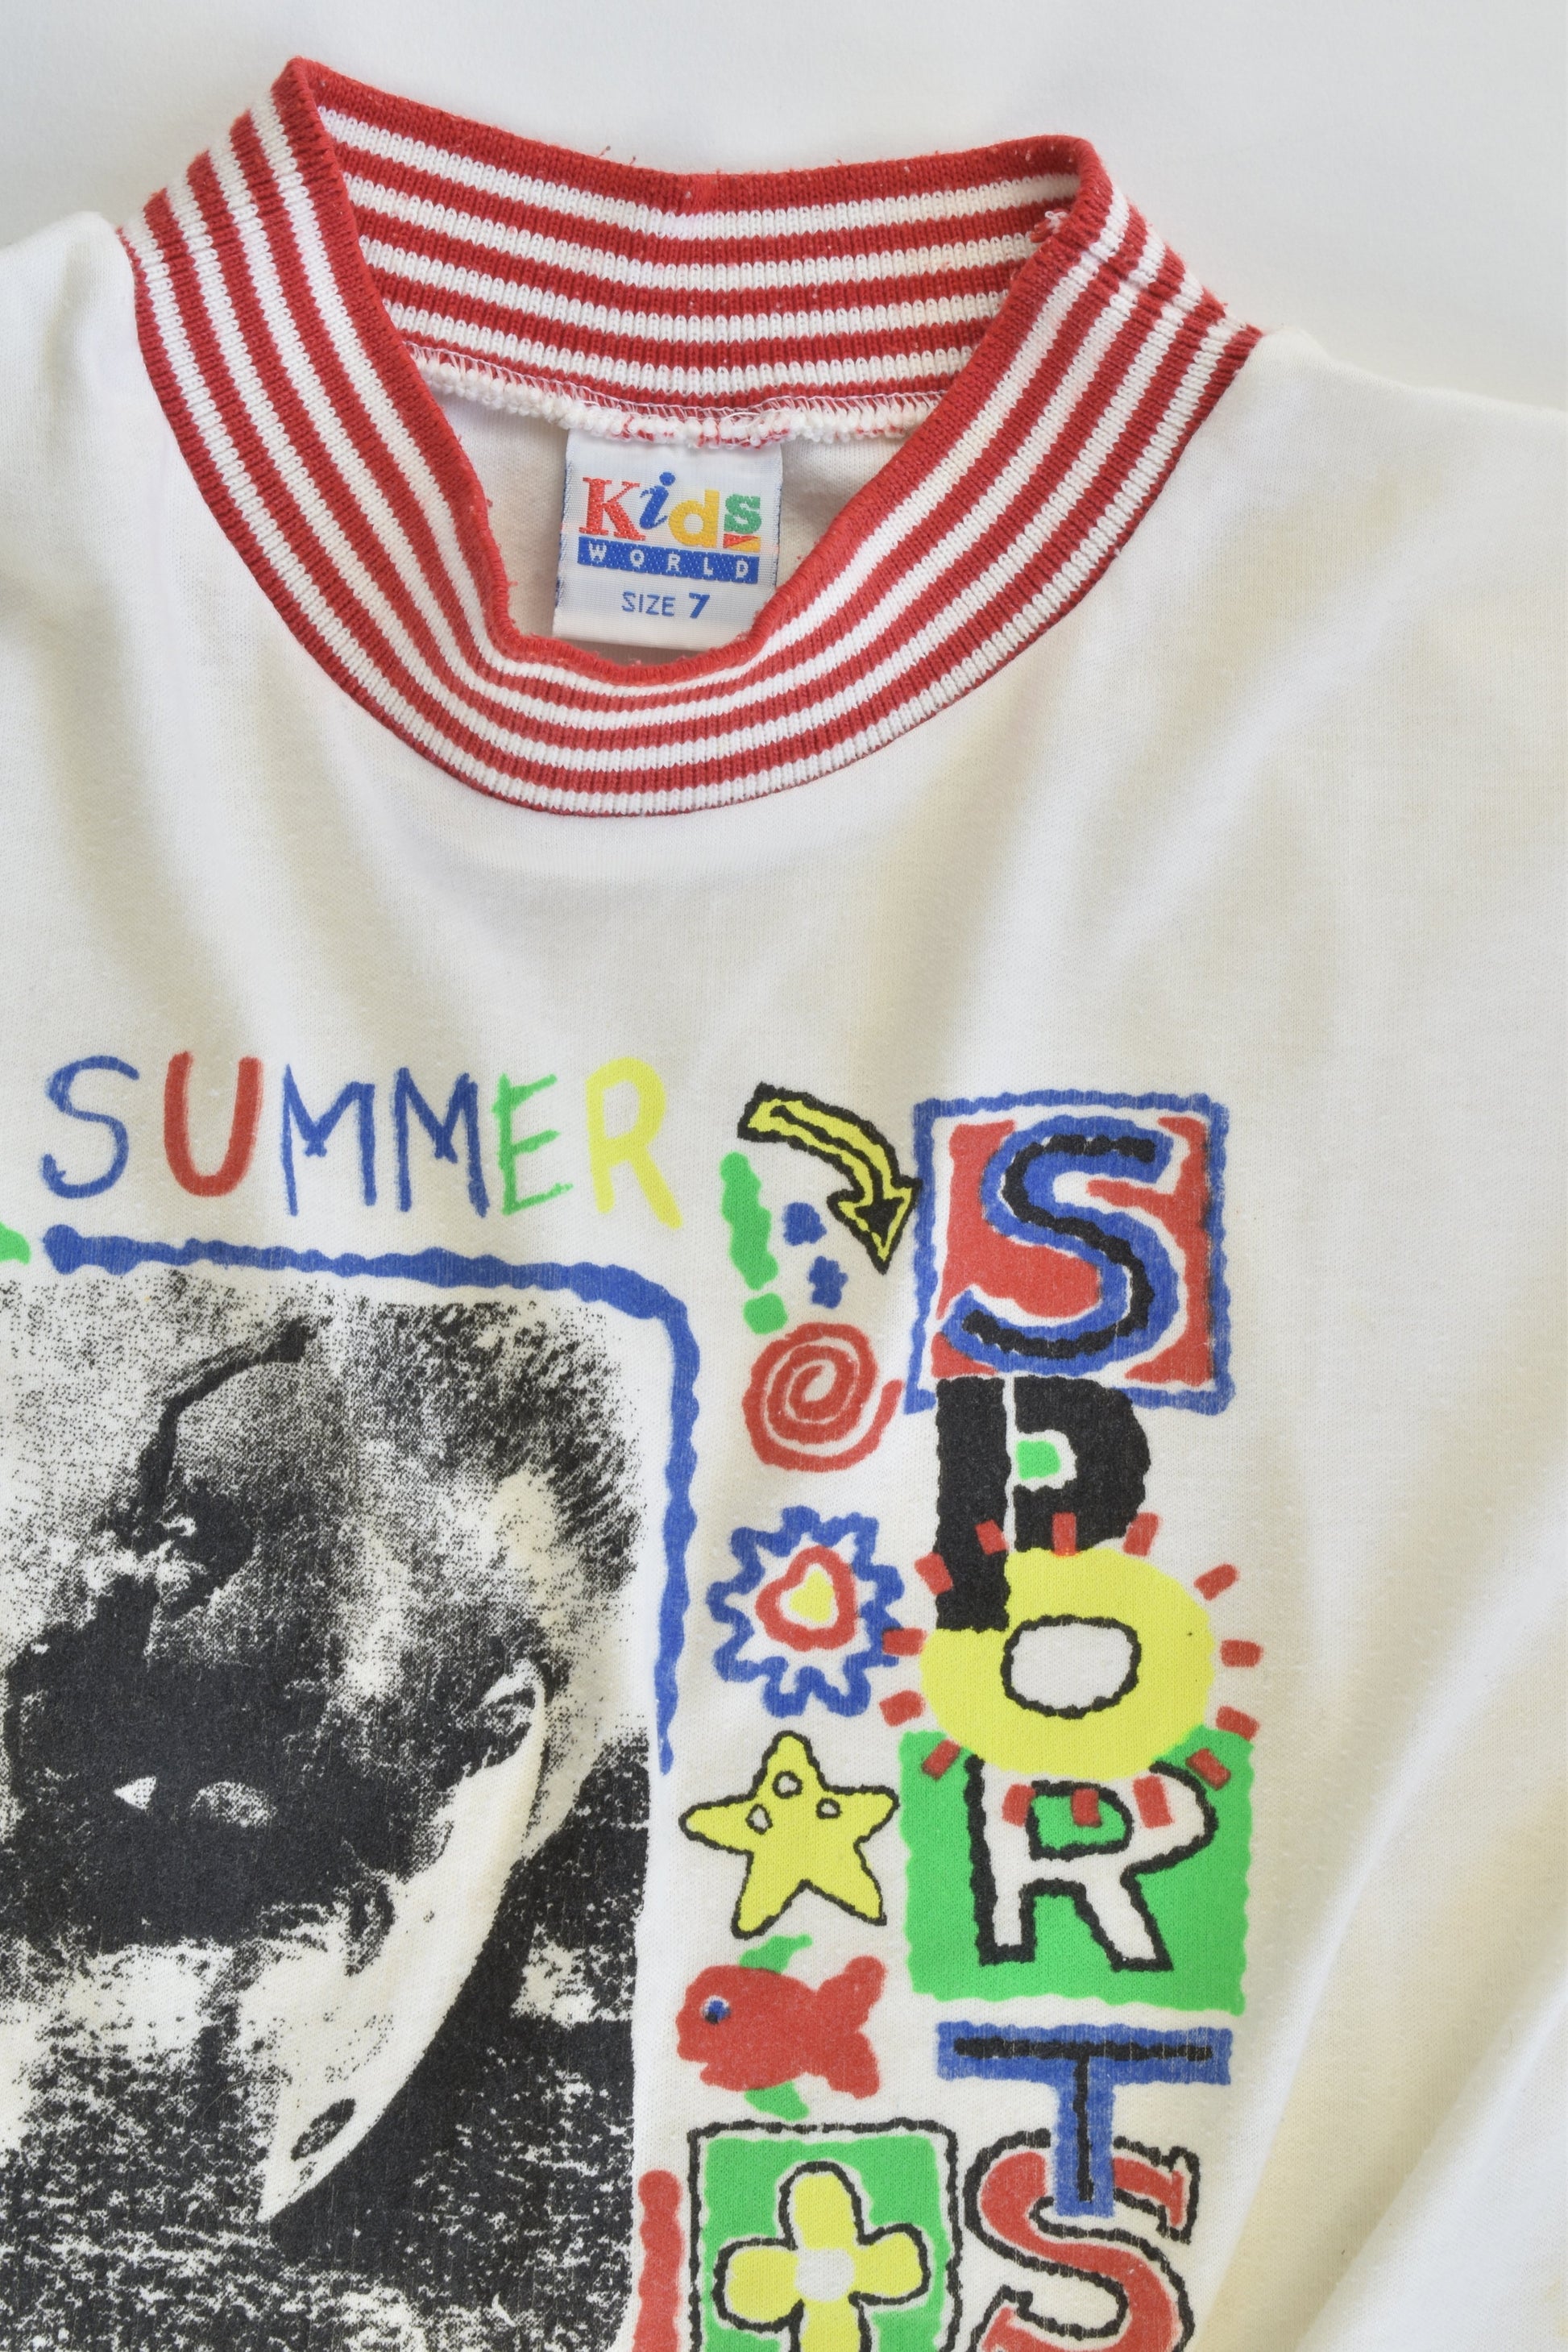 Kids World Size 7 Vintage 'Summer Sports' T-shirt